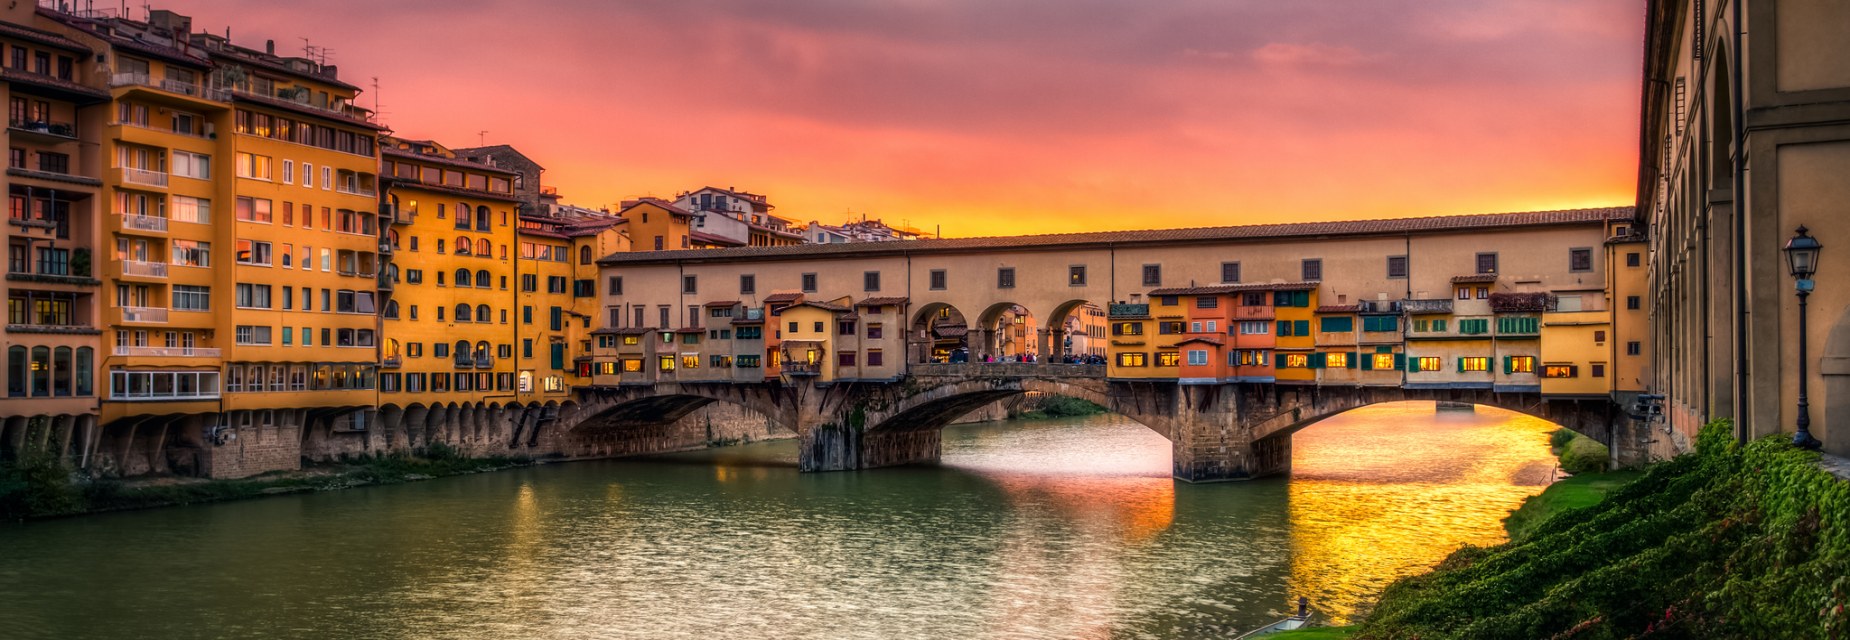 Nice Images Collection: Ponte Vecchio Desktop Wallpapers